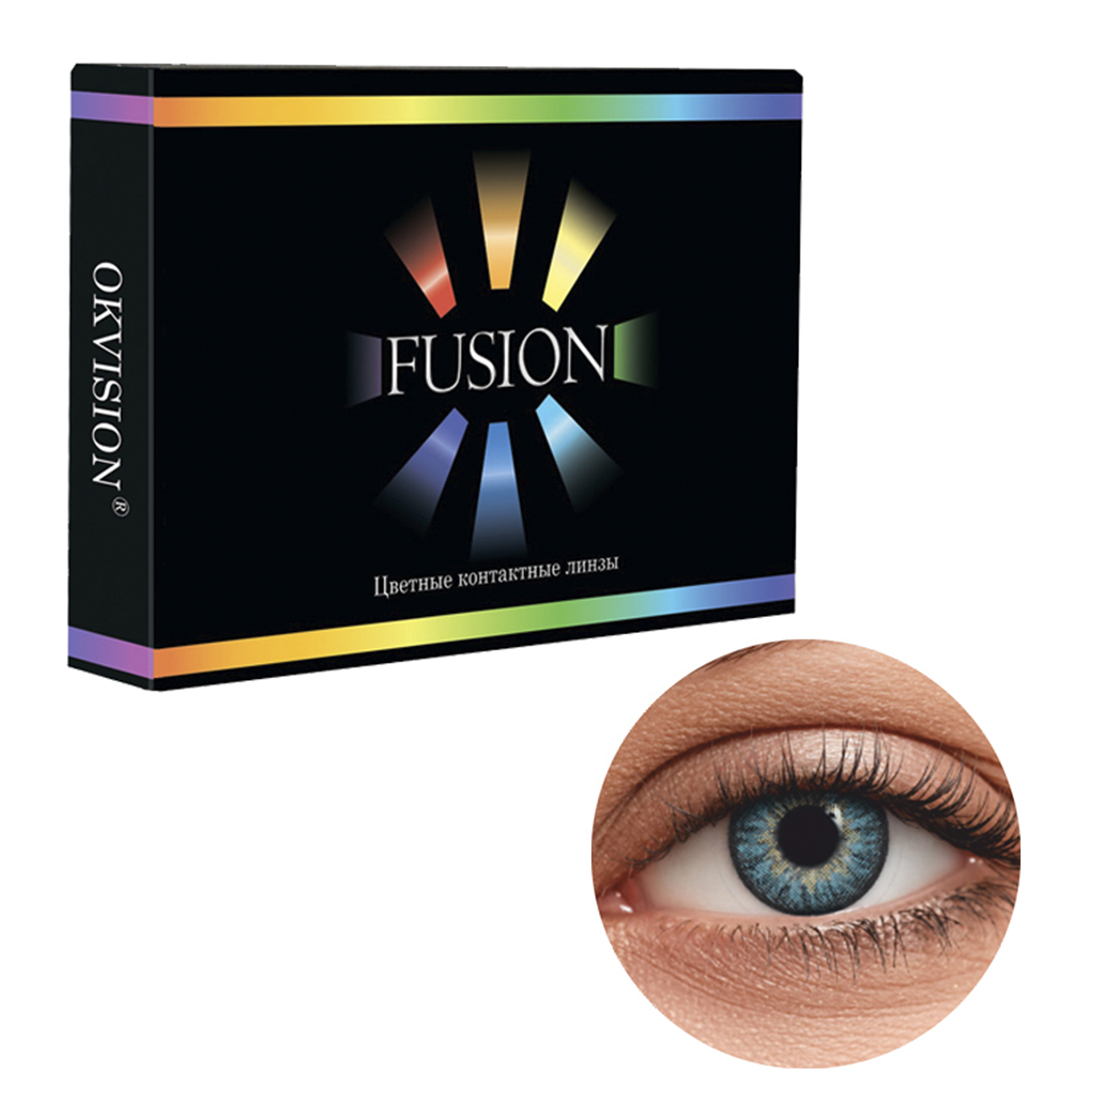 Цветные контактные линзы OKVision Fusion monthly R 8.6 -0.50 цвет Sky Blue 2 шт 1 месяц - фото 1